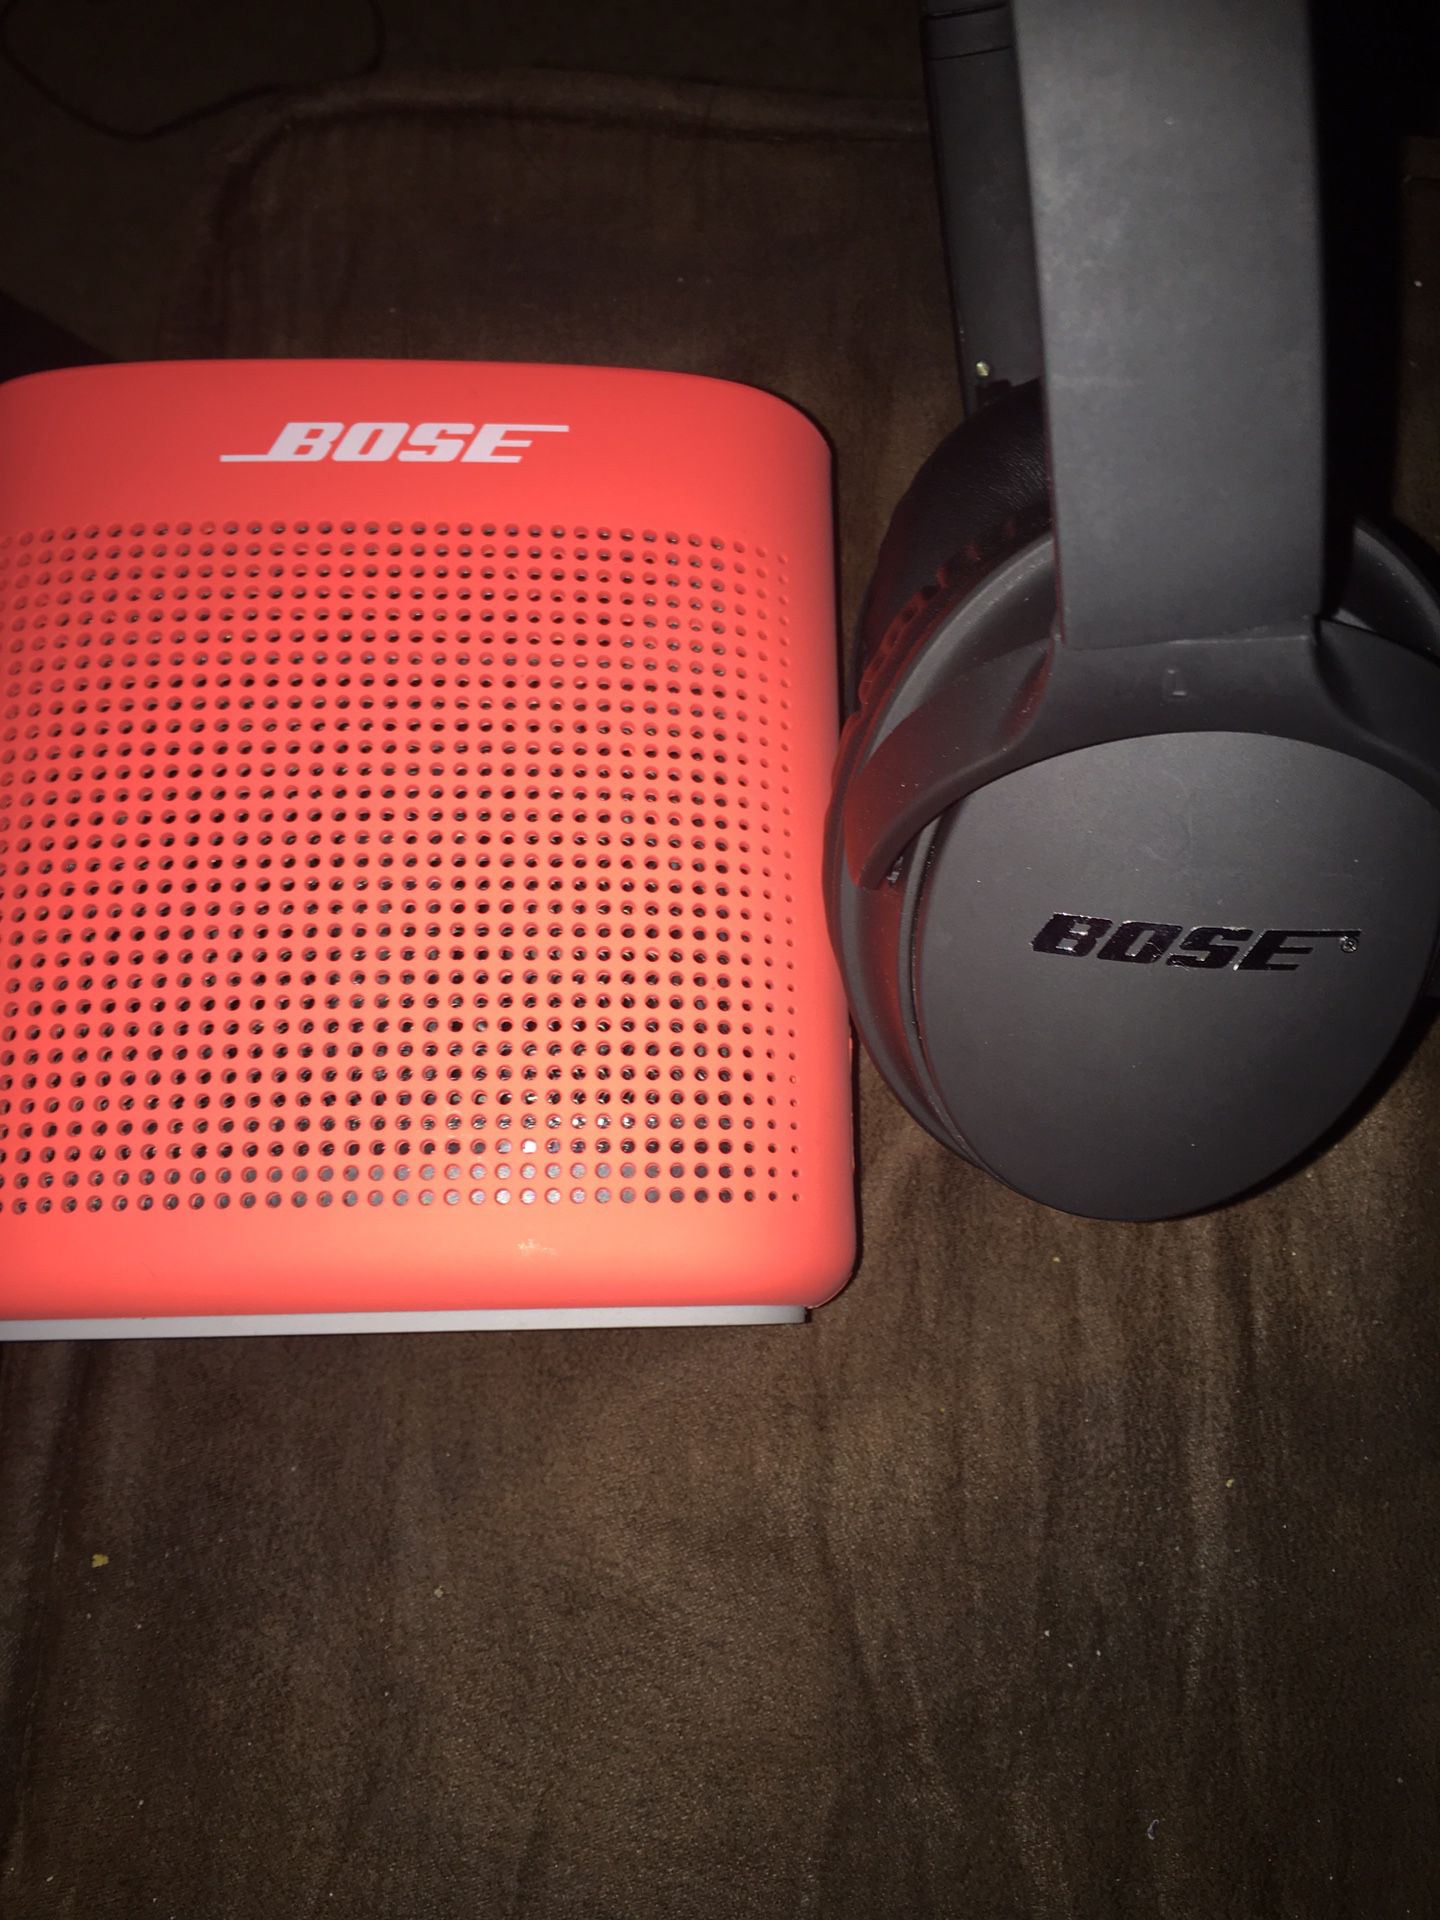 Bose bang so hard Bluetooth speaker and Bluetooth 🎧